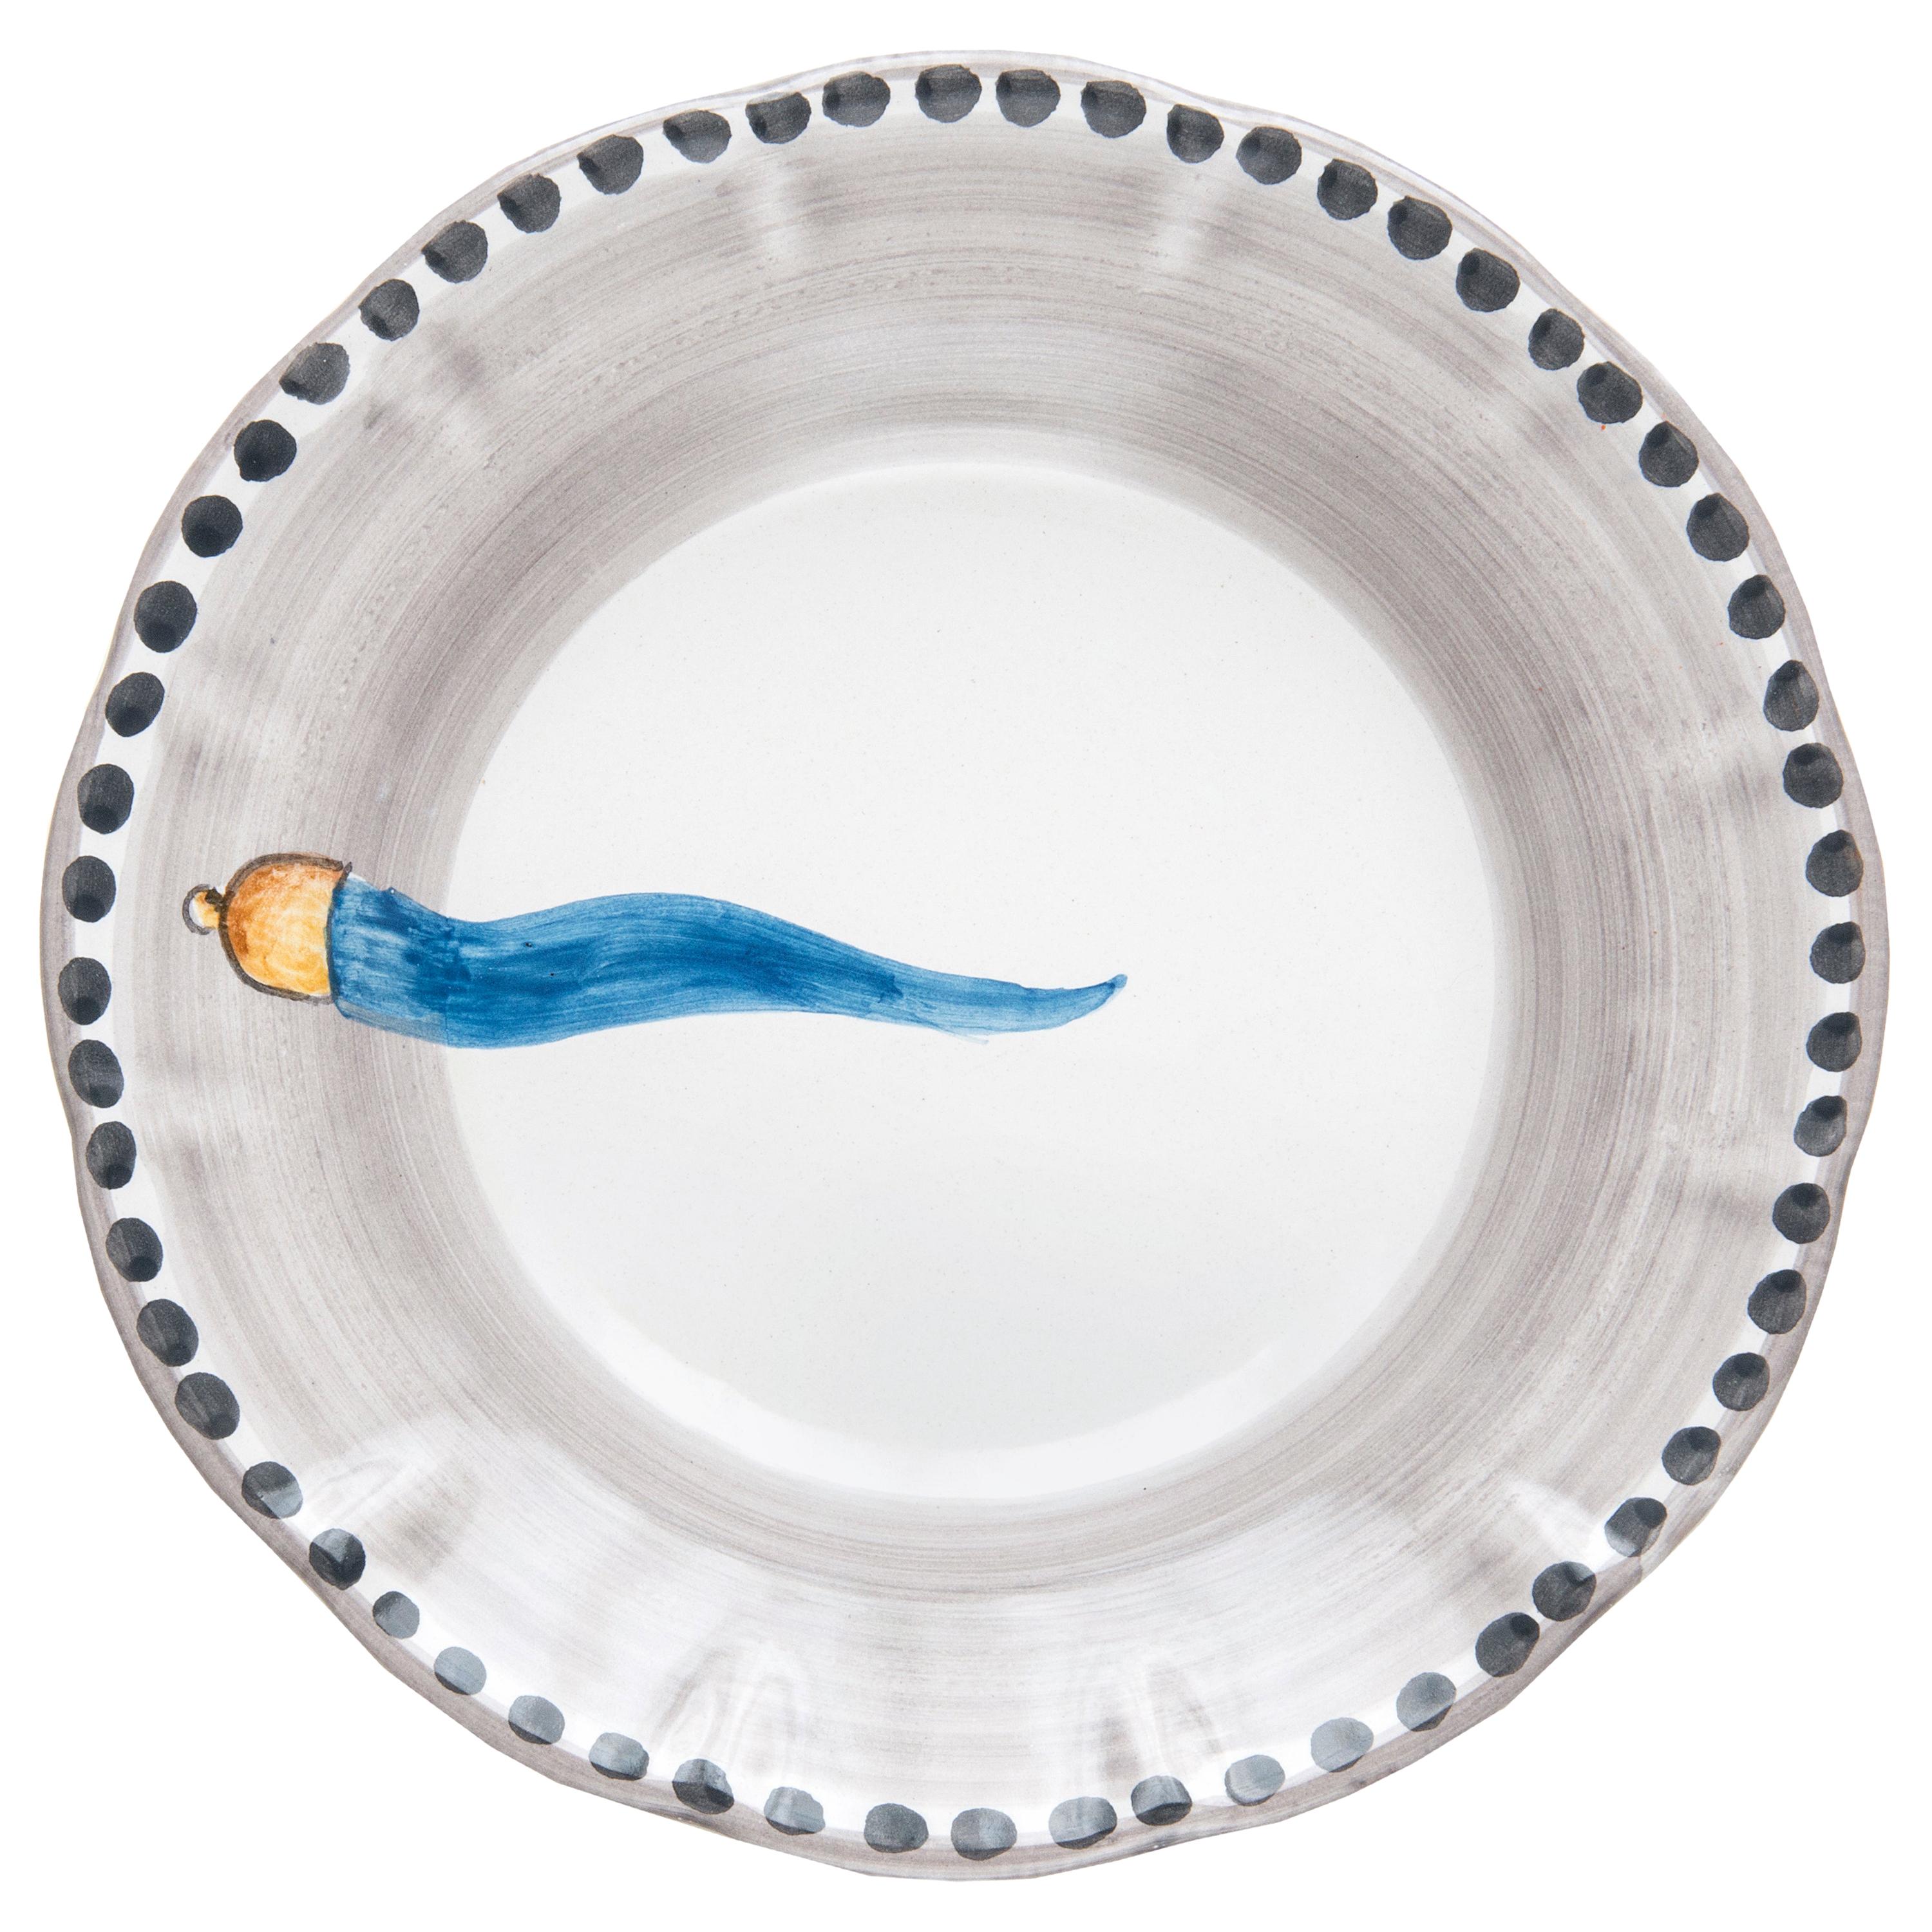 21st Century Hand Painted Ceramic Dinner Plate in Light Blue and White Handmade